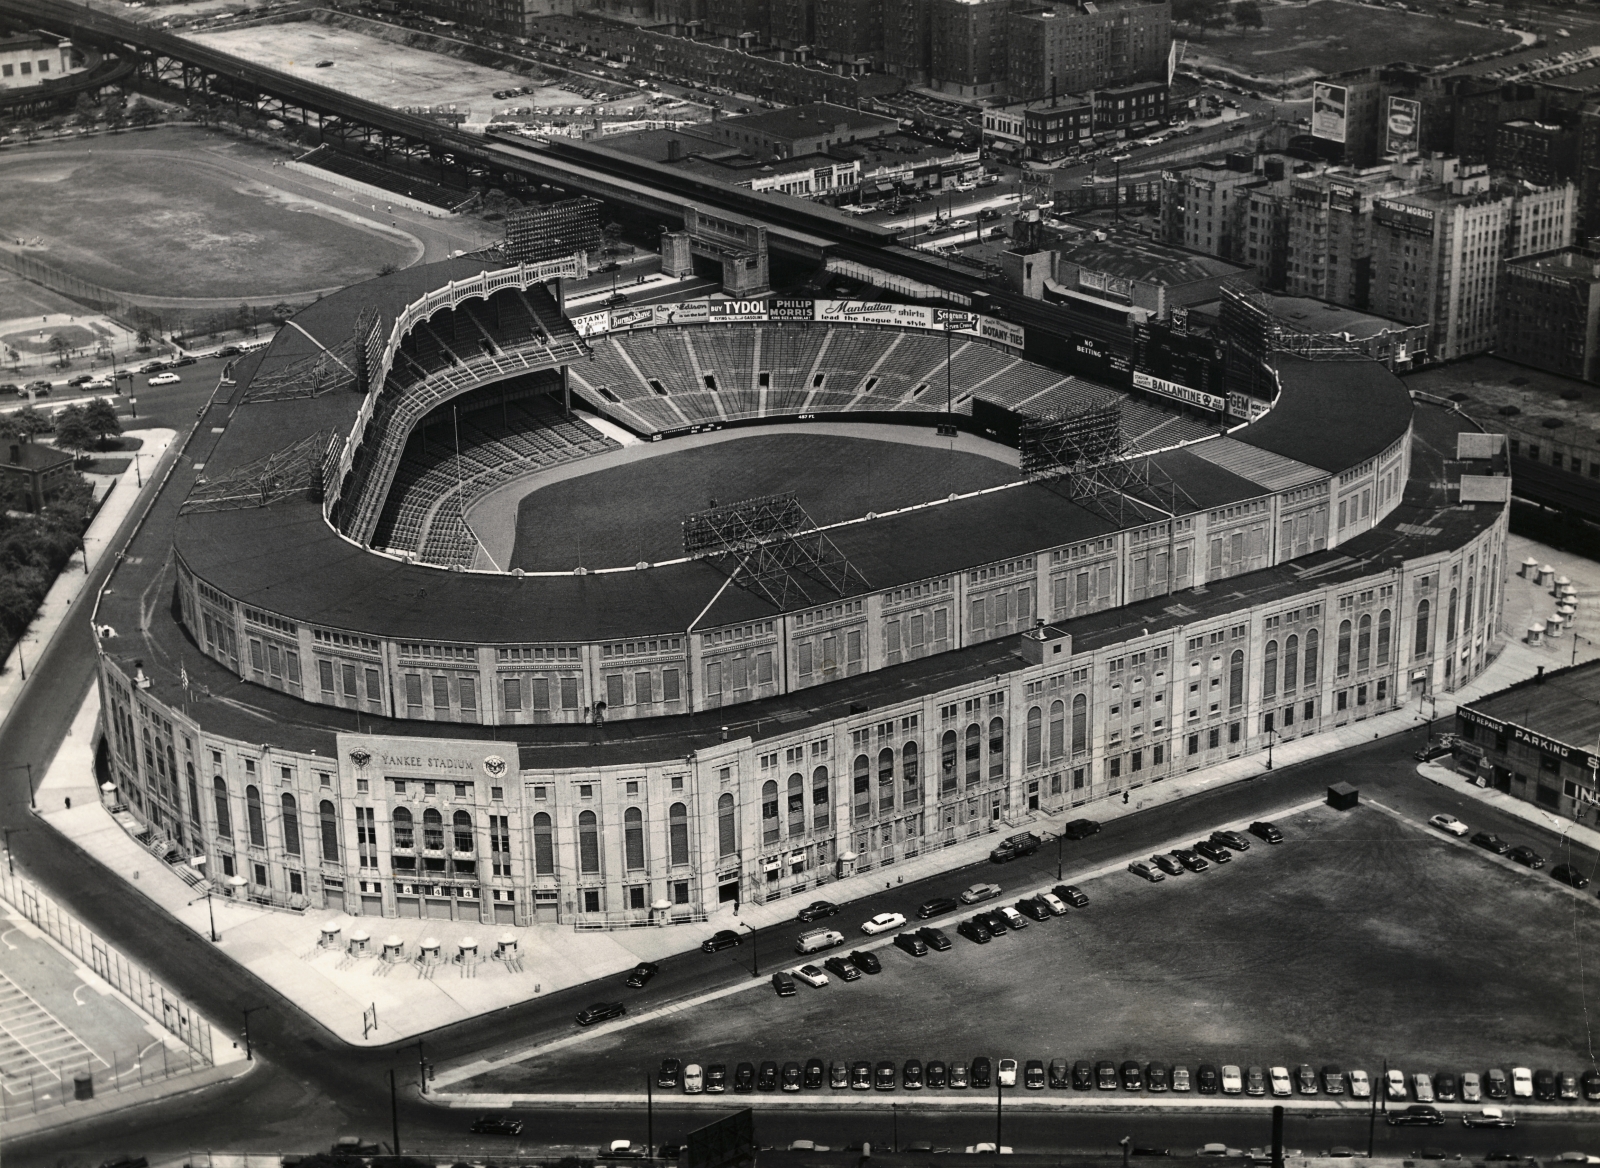 Old Yankee Stadium - Baseball in Stadiums